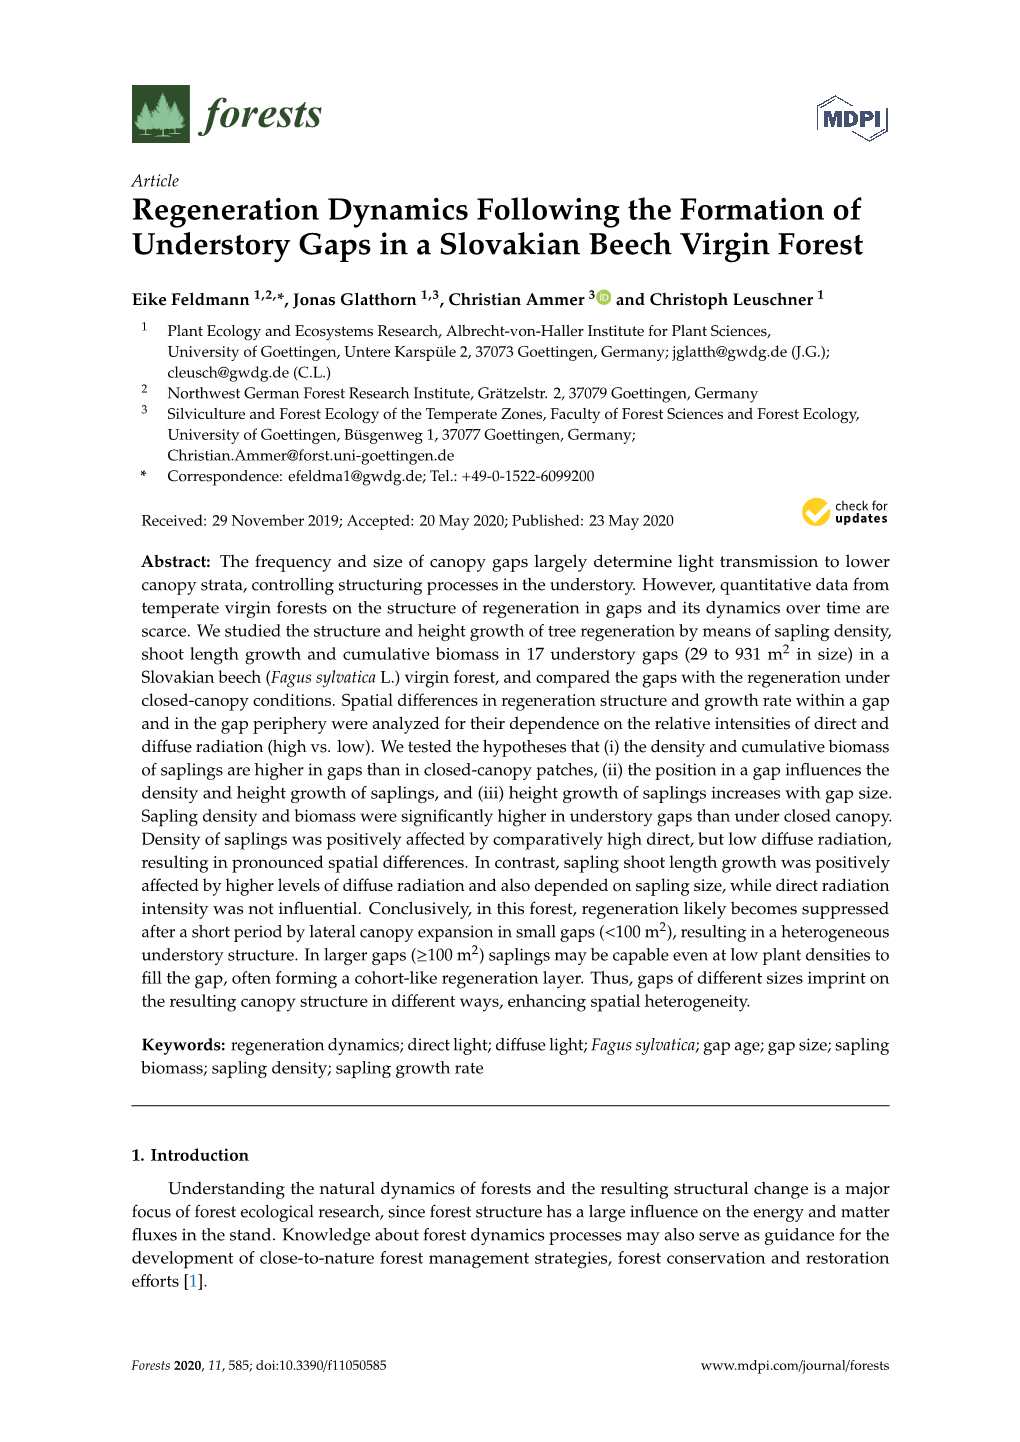 Regeneration Dynamics Following the Formation of Understory Gaps in a Slovakian Beech Virgin Forest